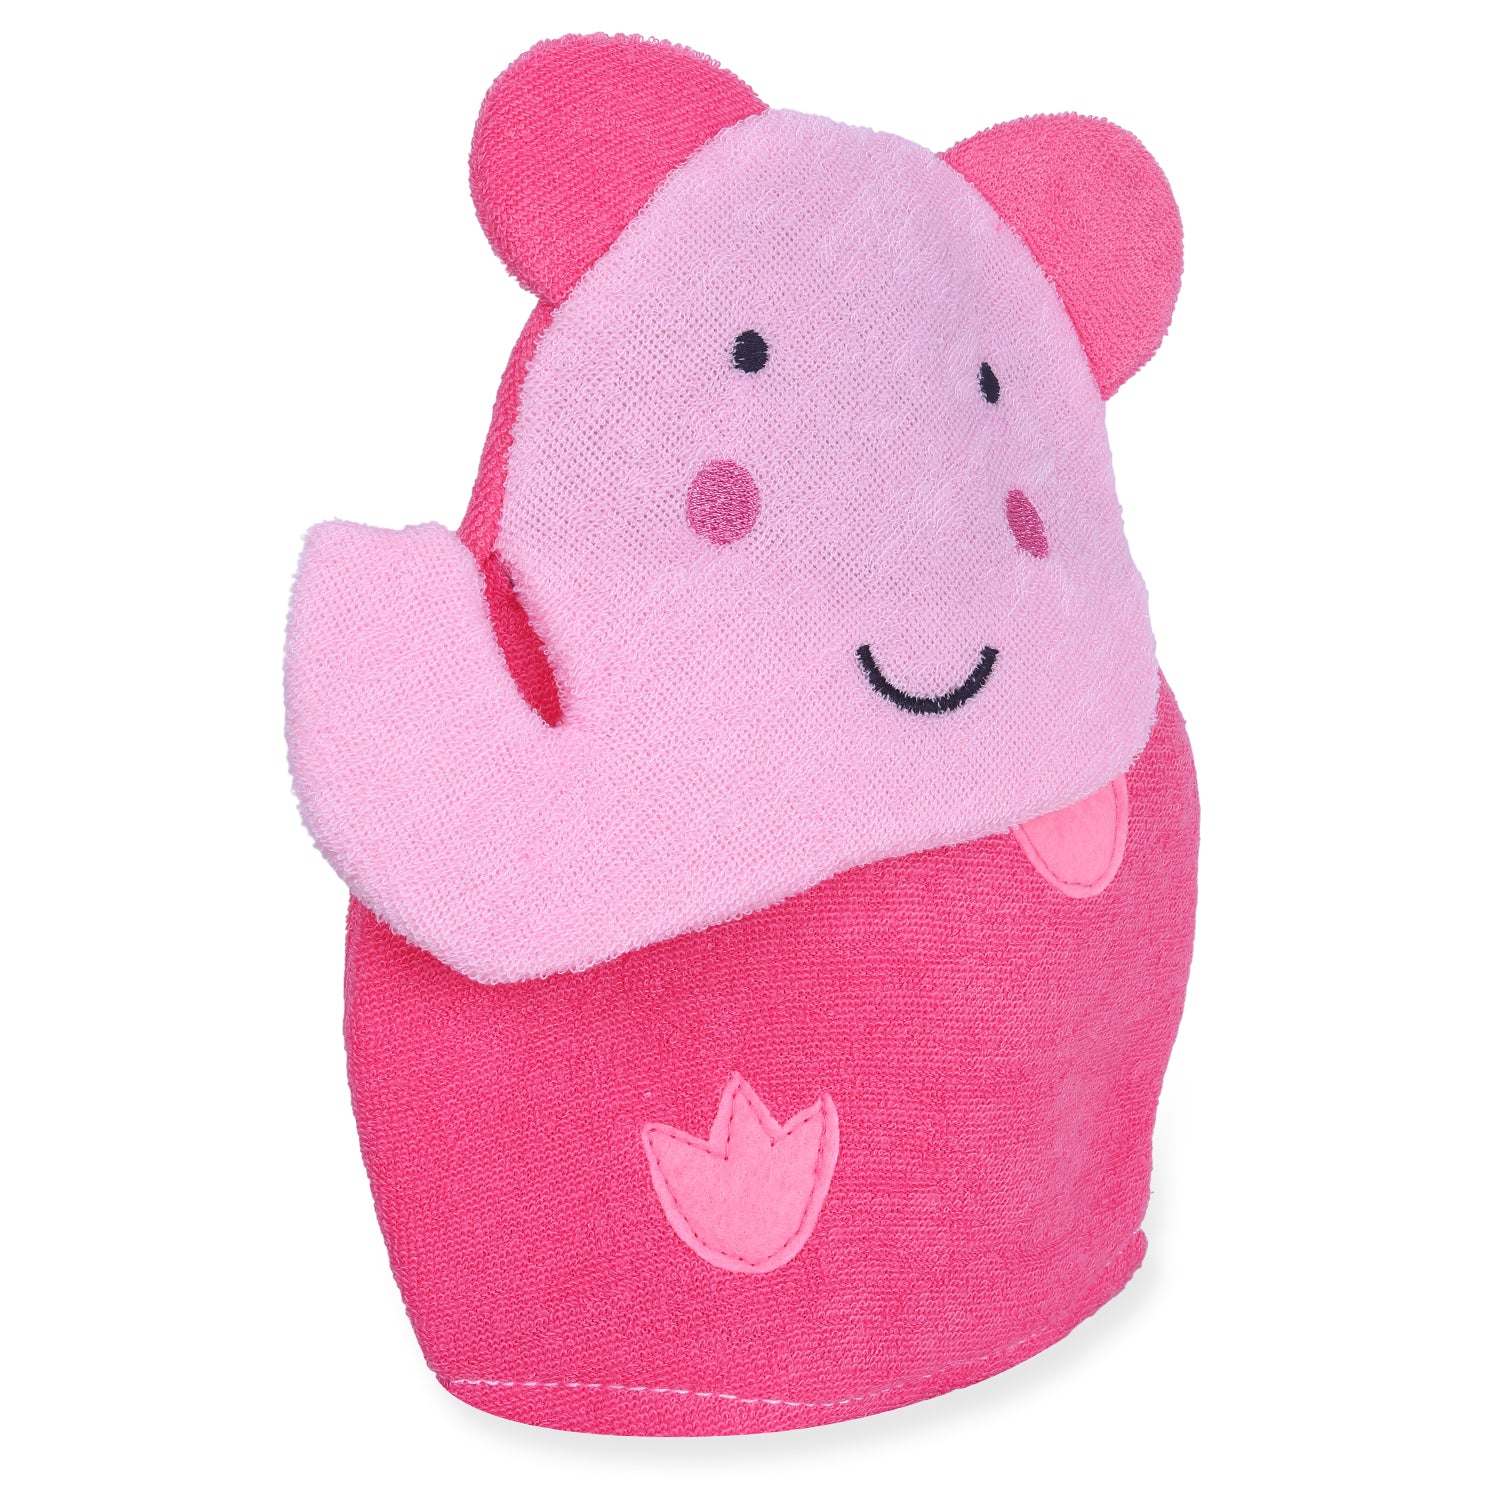 Baby Moo Blushing Elephant Bath Time Fun Hand Puppet Loofah Bath Glove - Pink